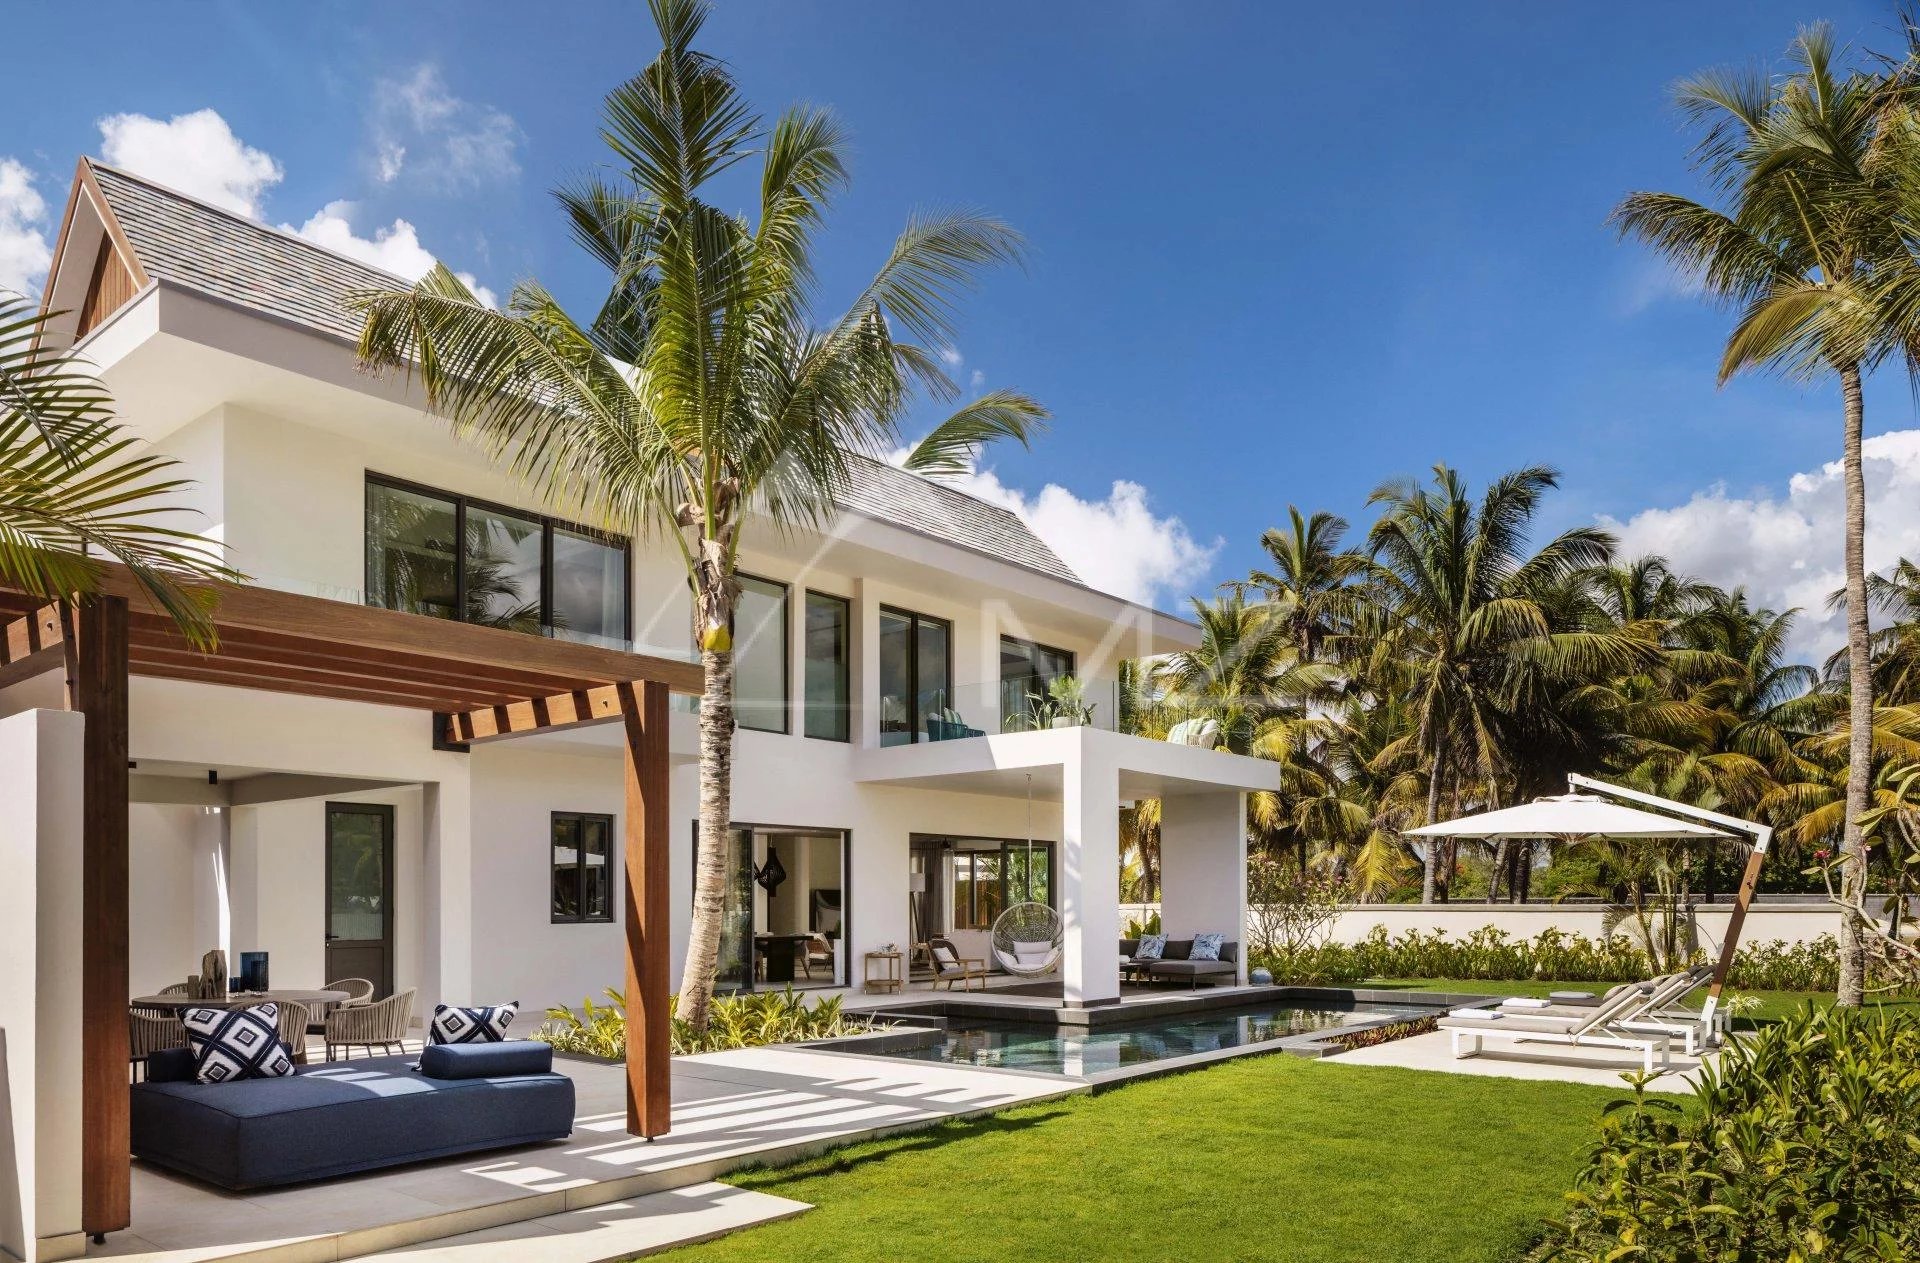 Mauritius - Belle Mare - Luxury villa in a 5* resort